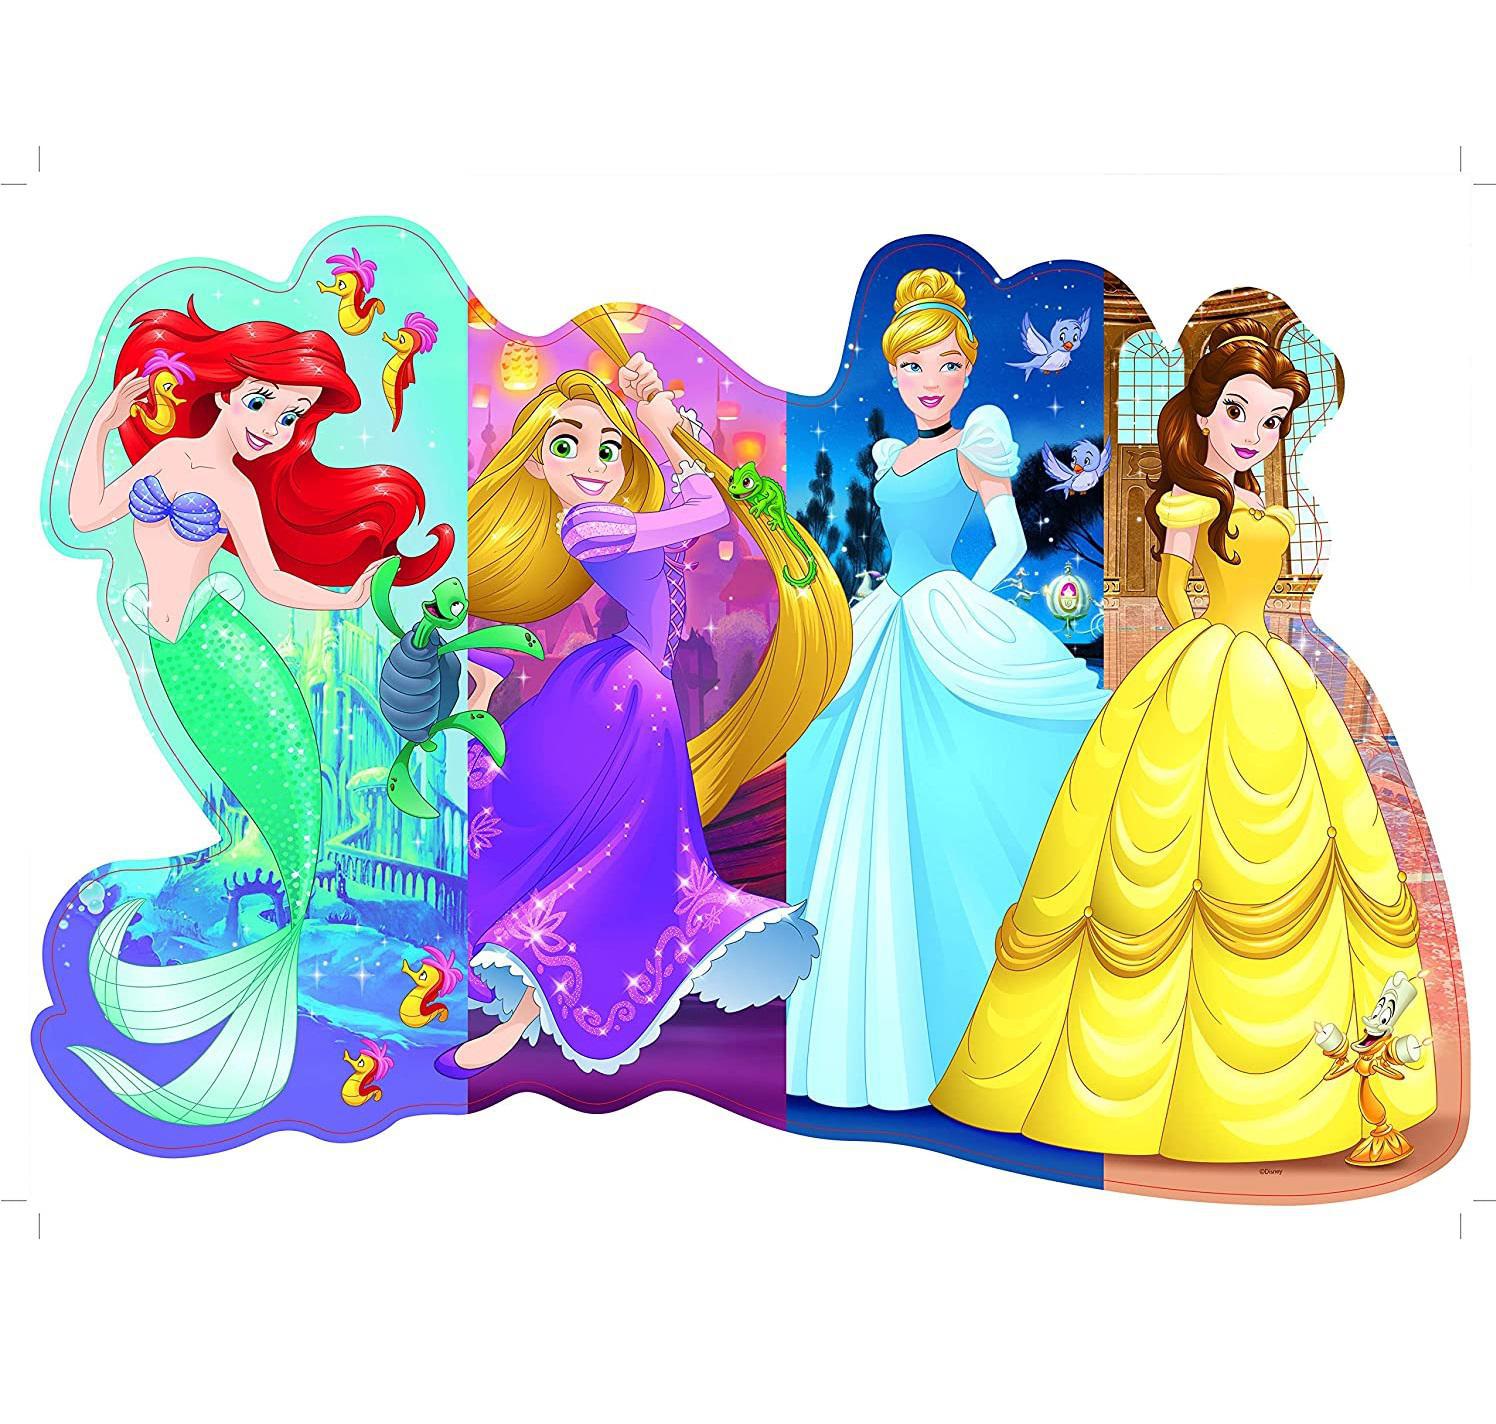 Ravensburger Shaped Jigsaw Puzzle | Pretty Disney Princesses 24 Piece